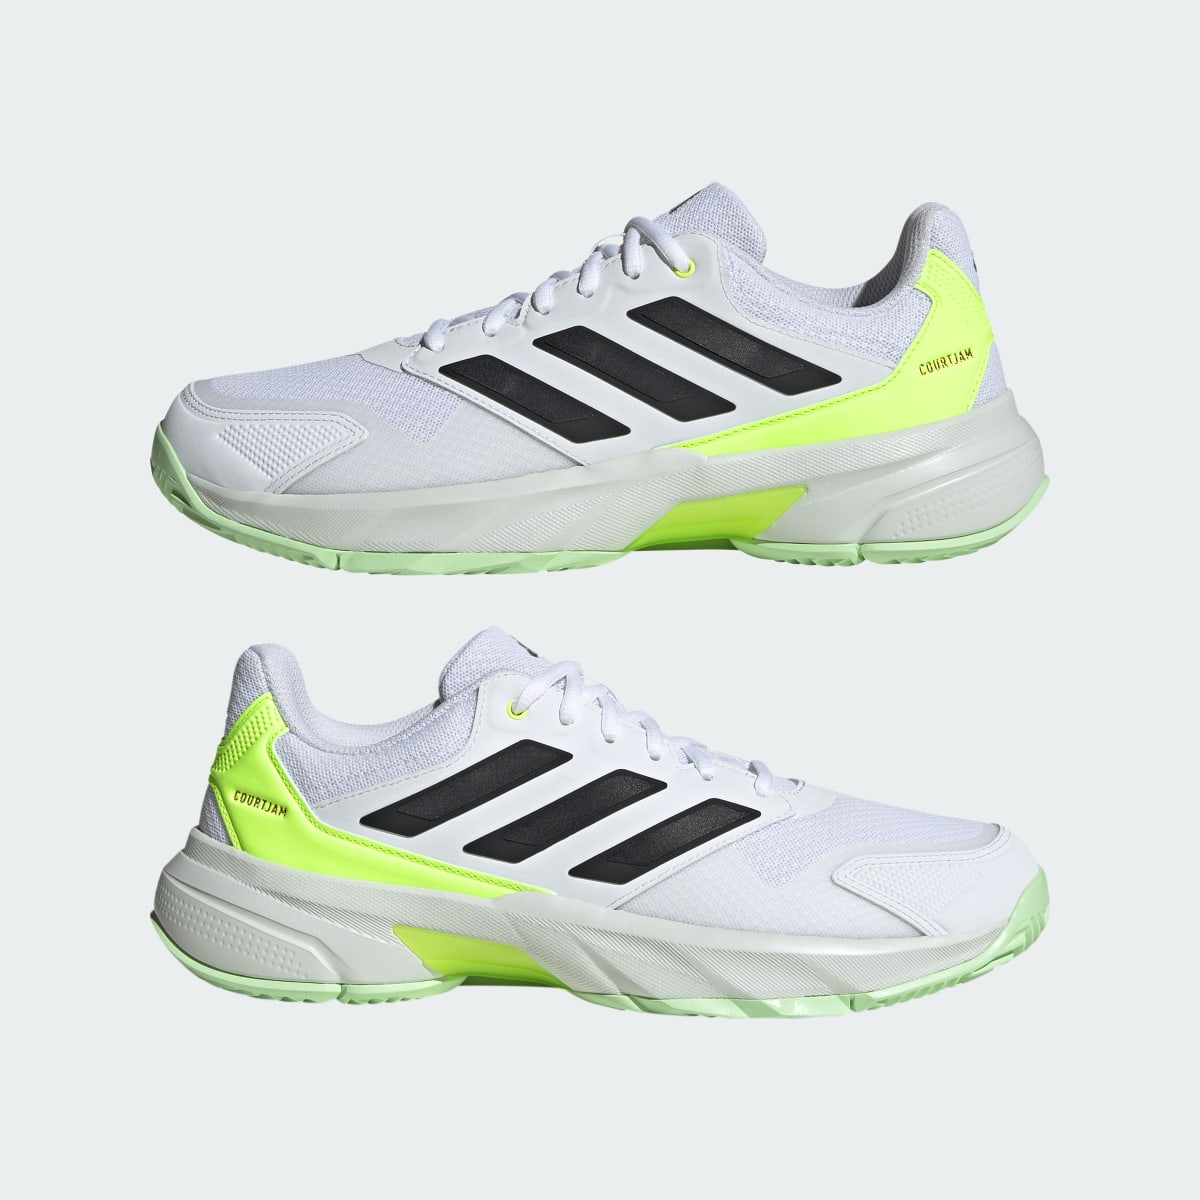 Adidas CourtJam Control 3 Tennis Shoes. 11